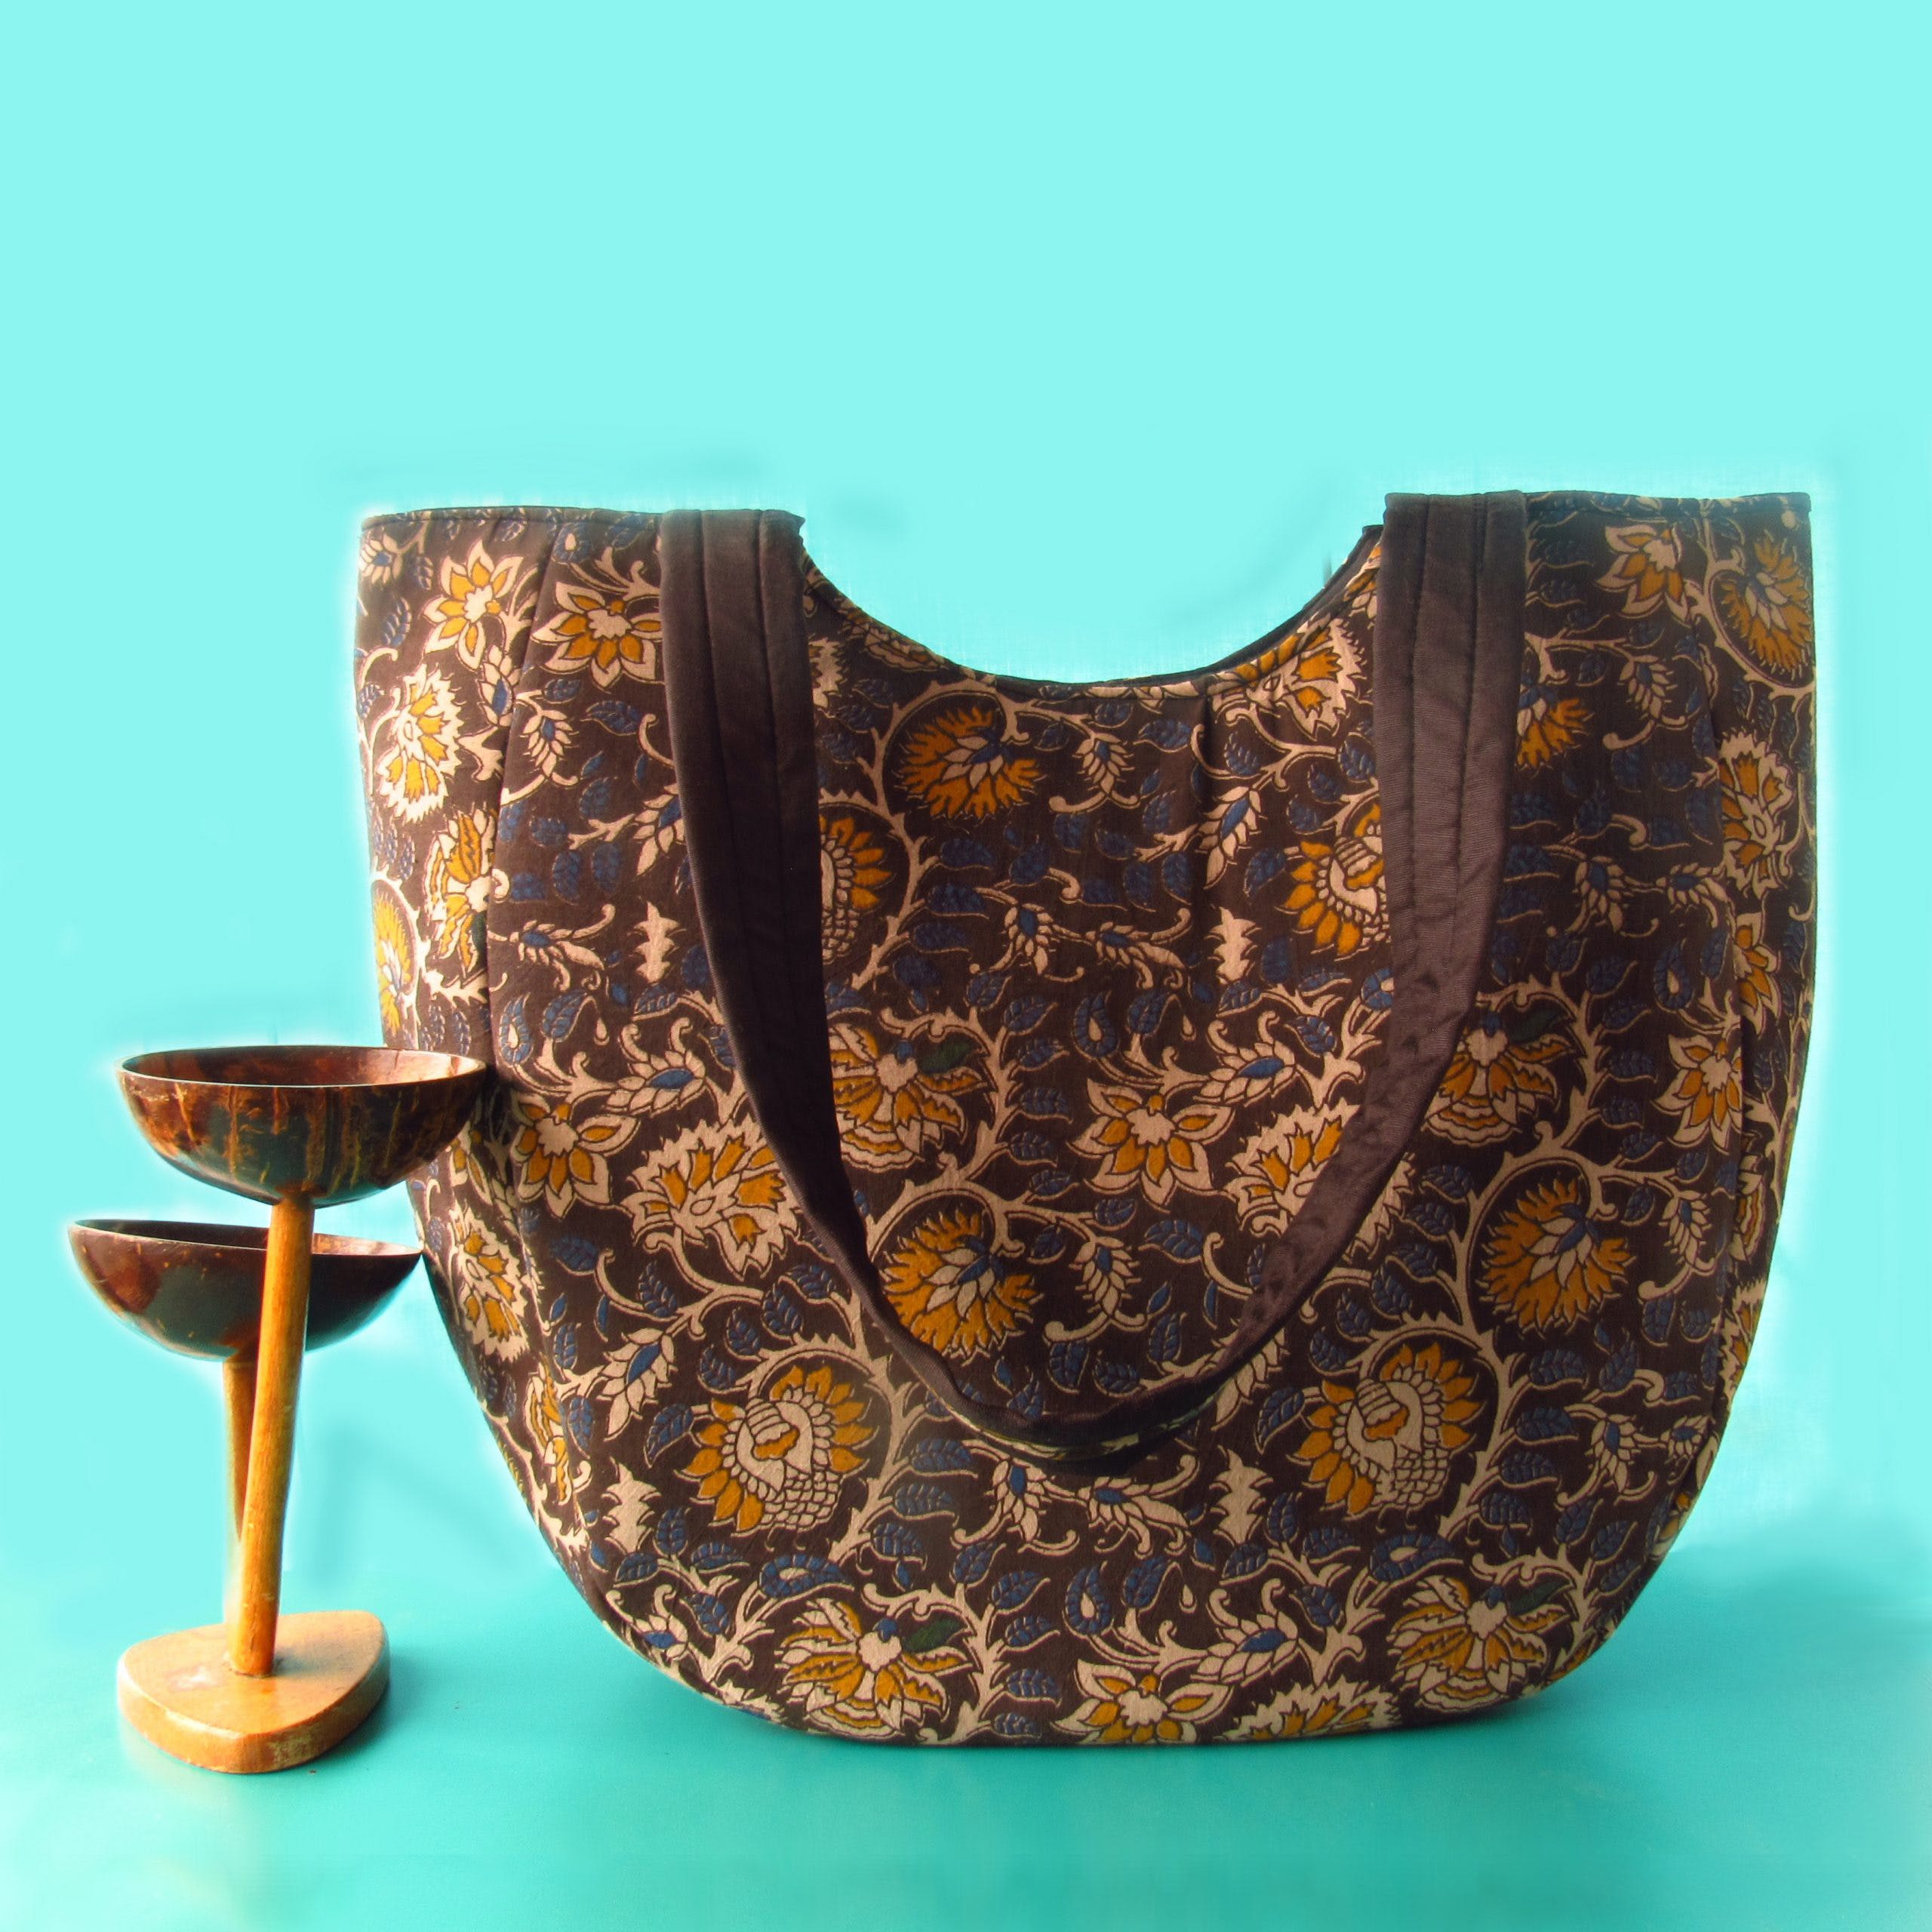 Bag,Handbag,Fashion accessory,Diaper bag,Shoulder bag,Visual arts,Metal,Leather,Pattern